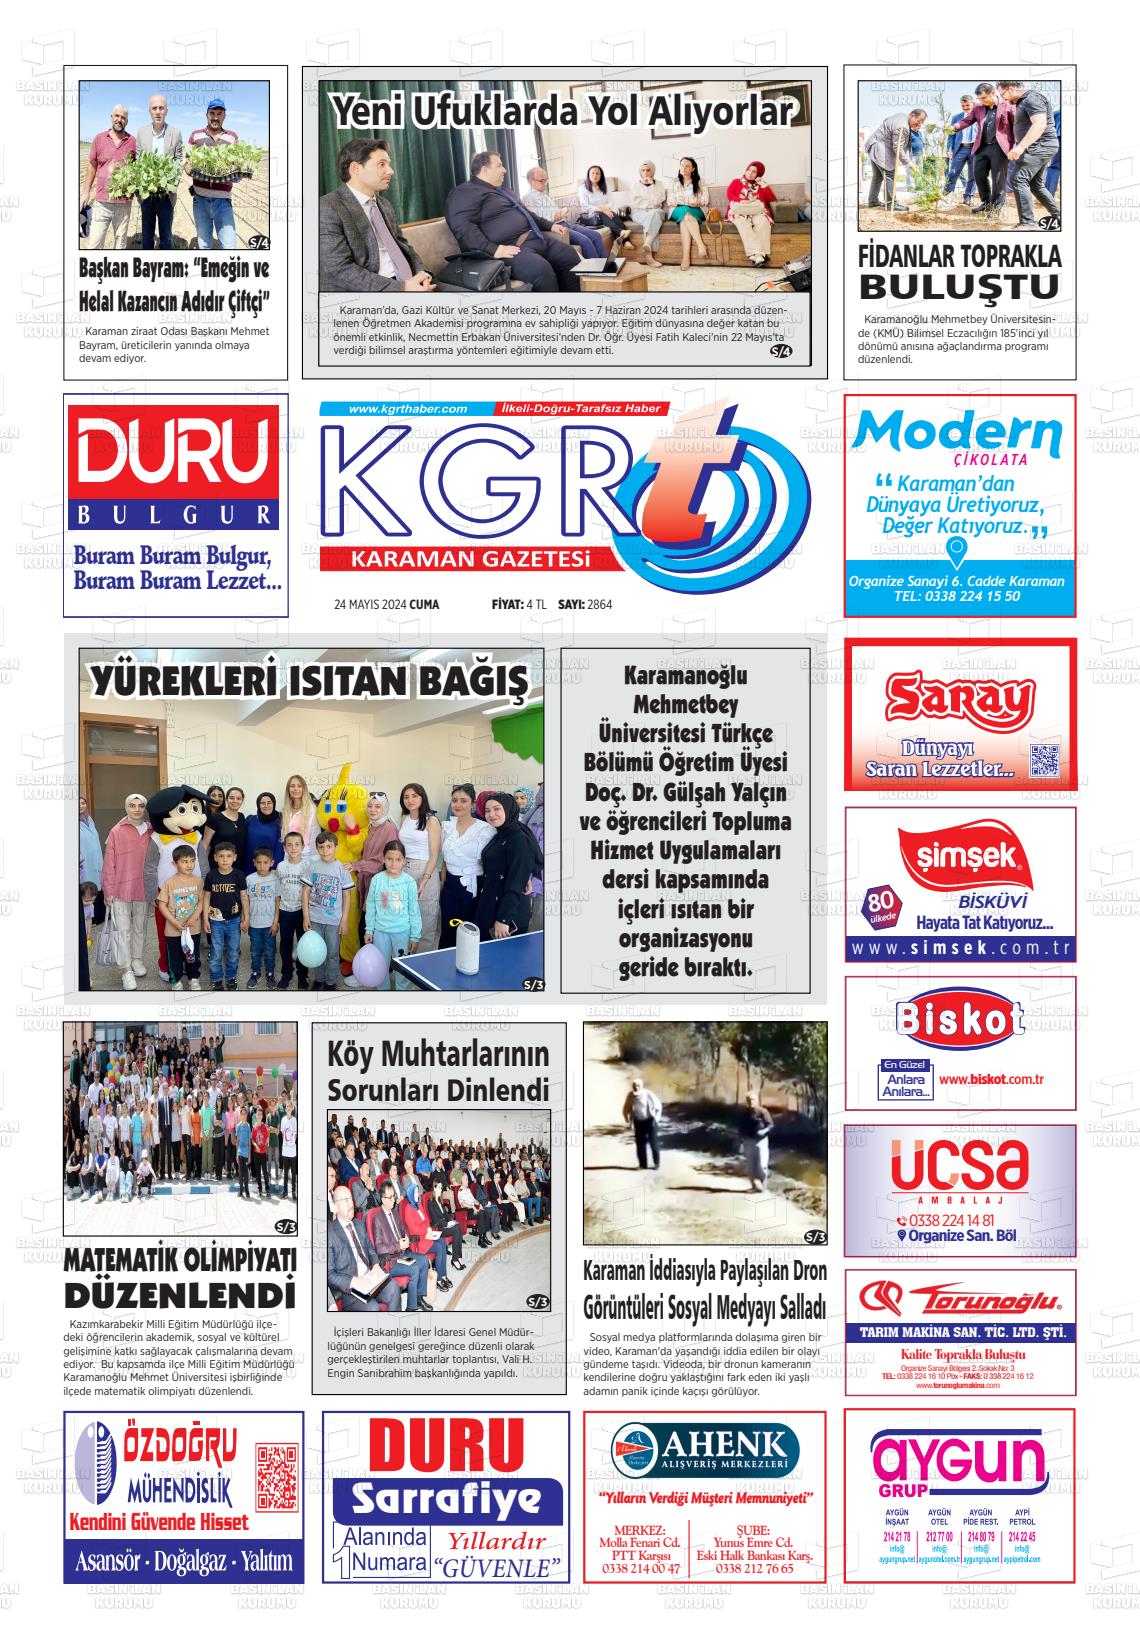 KGRT KARAMAN Gazetesi